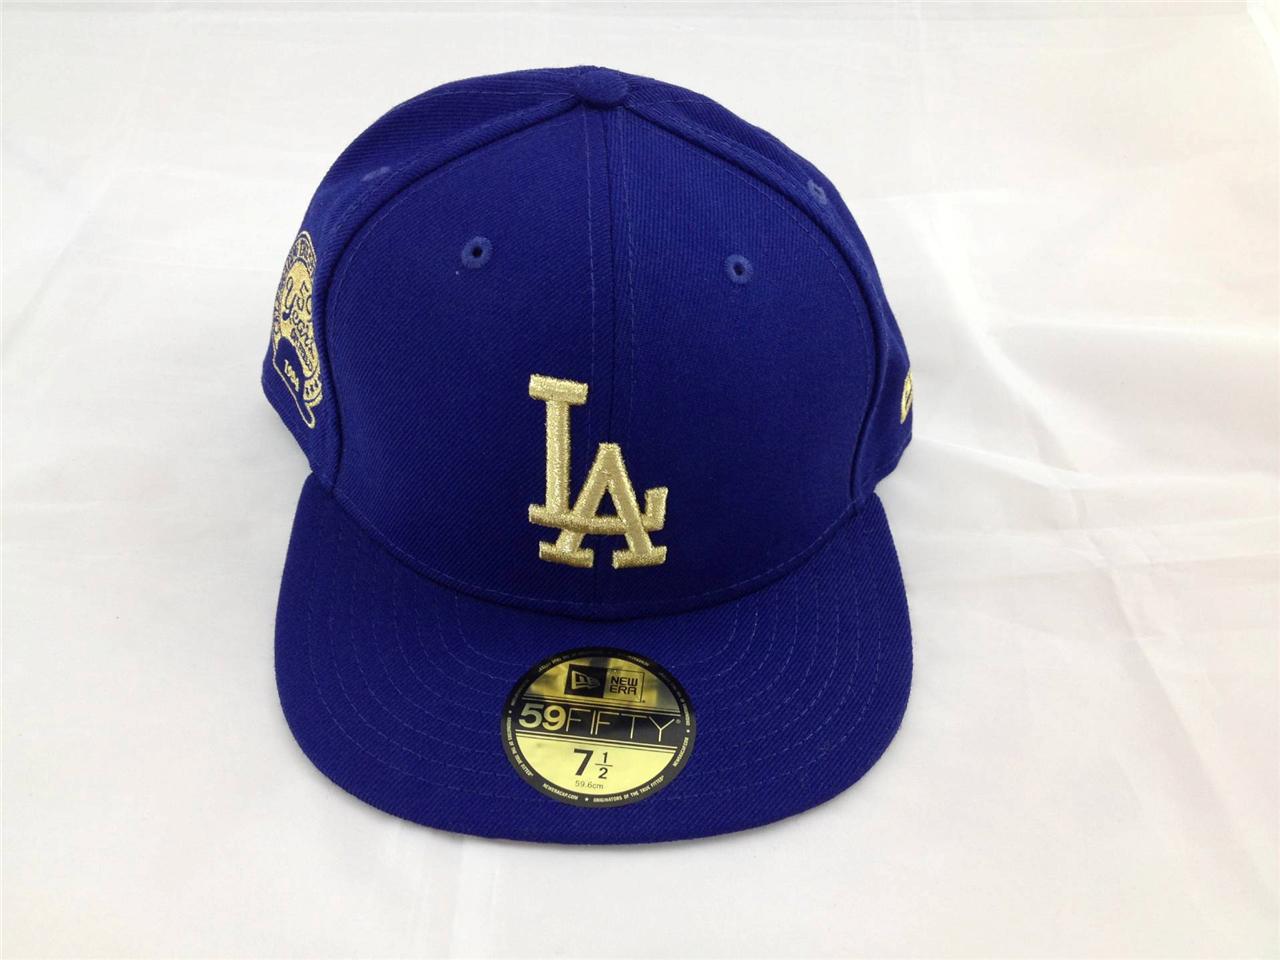 New Era Los Angeles Dodgers MLB 59th Anniversary Gold 59FIFTY Cap Blue ...